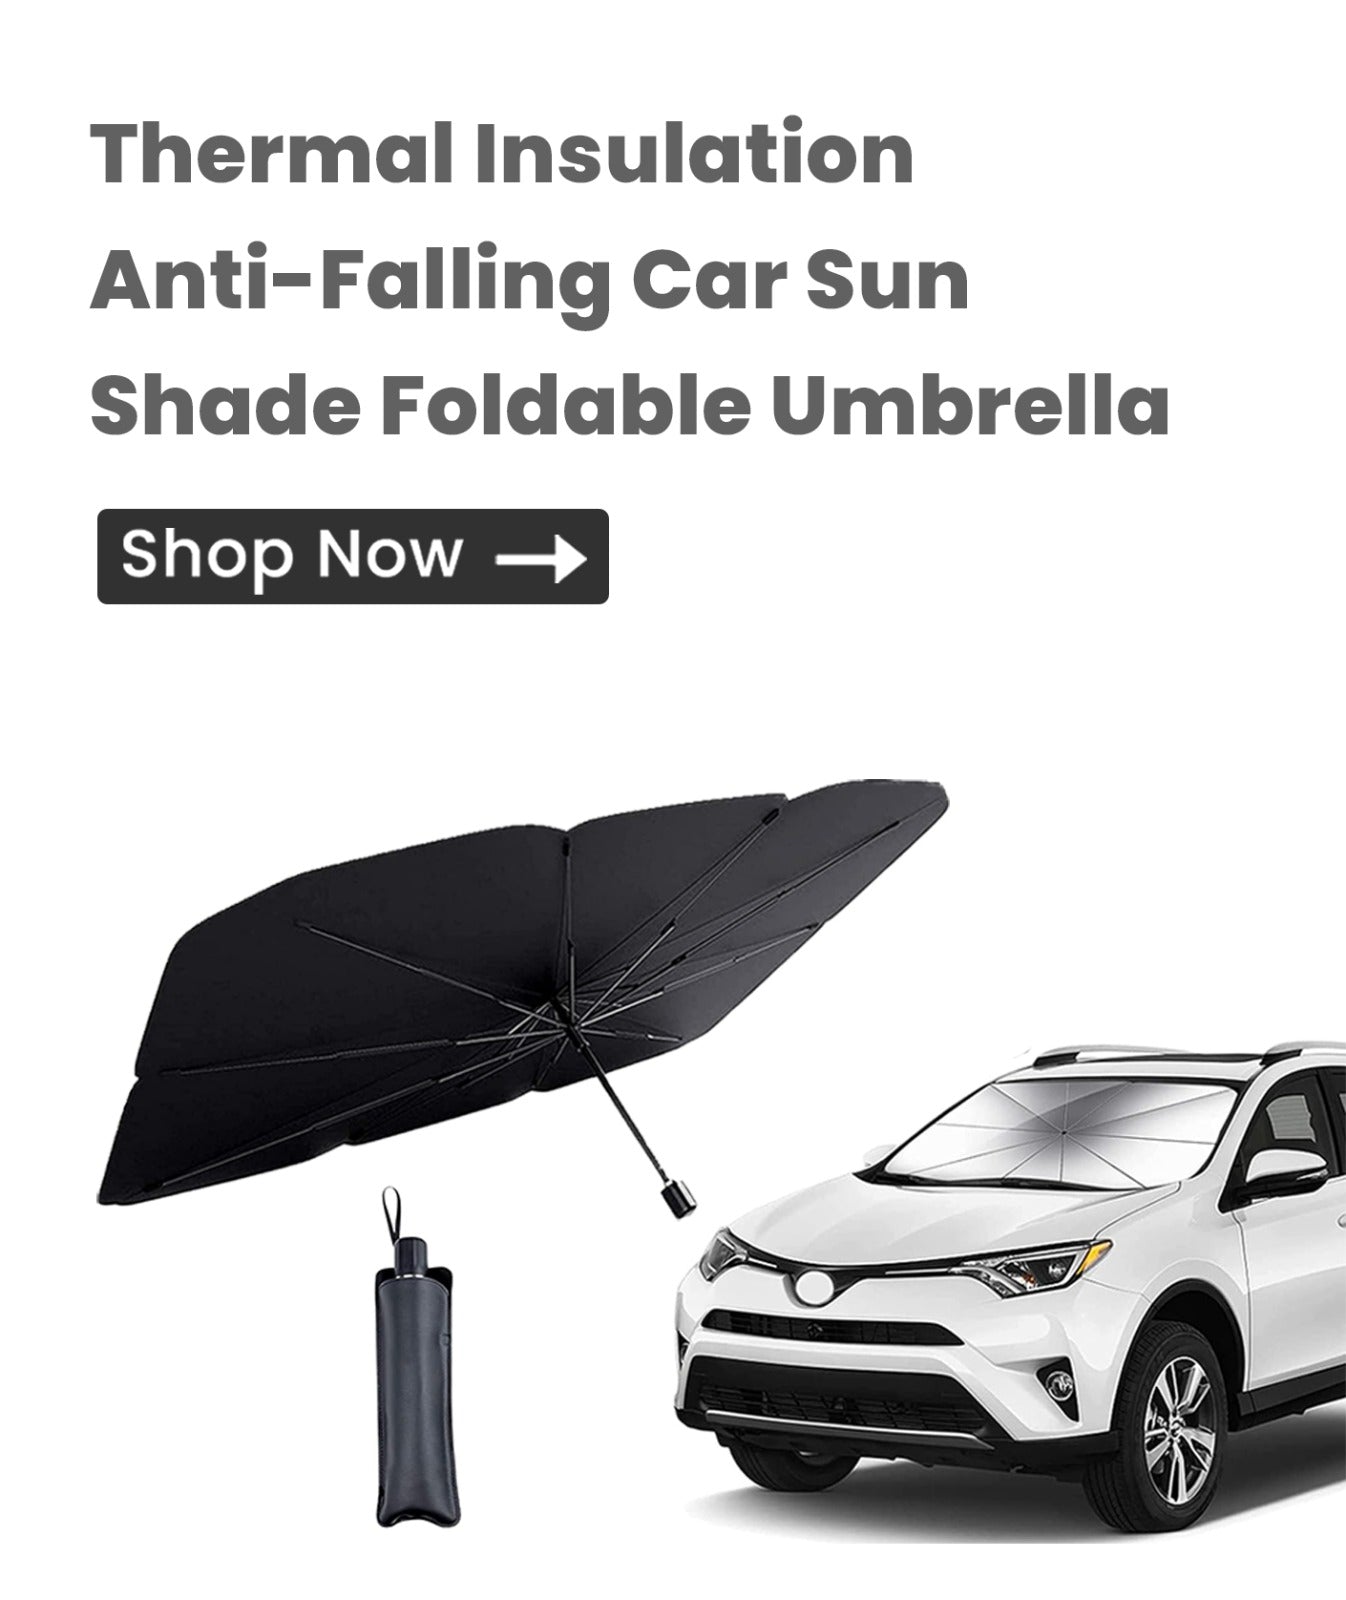 Thermal Insulation Foldable Car Umbrella